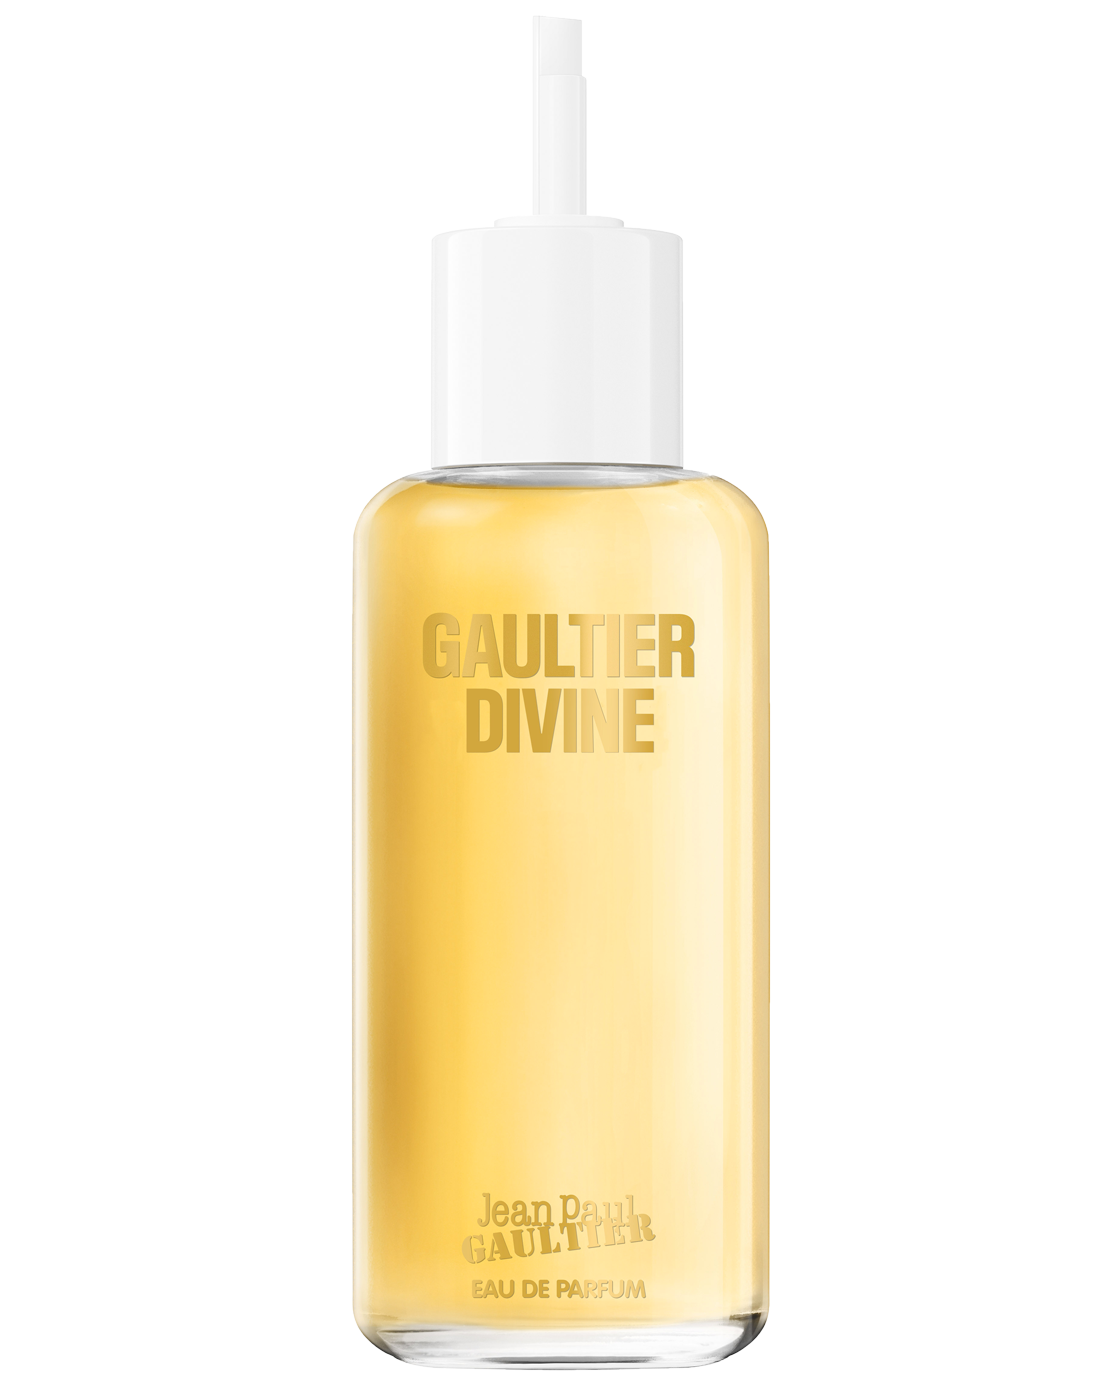 Gaultier Divine refill (6.8 oz)